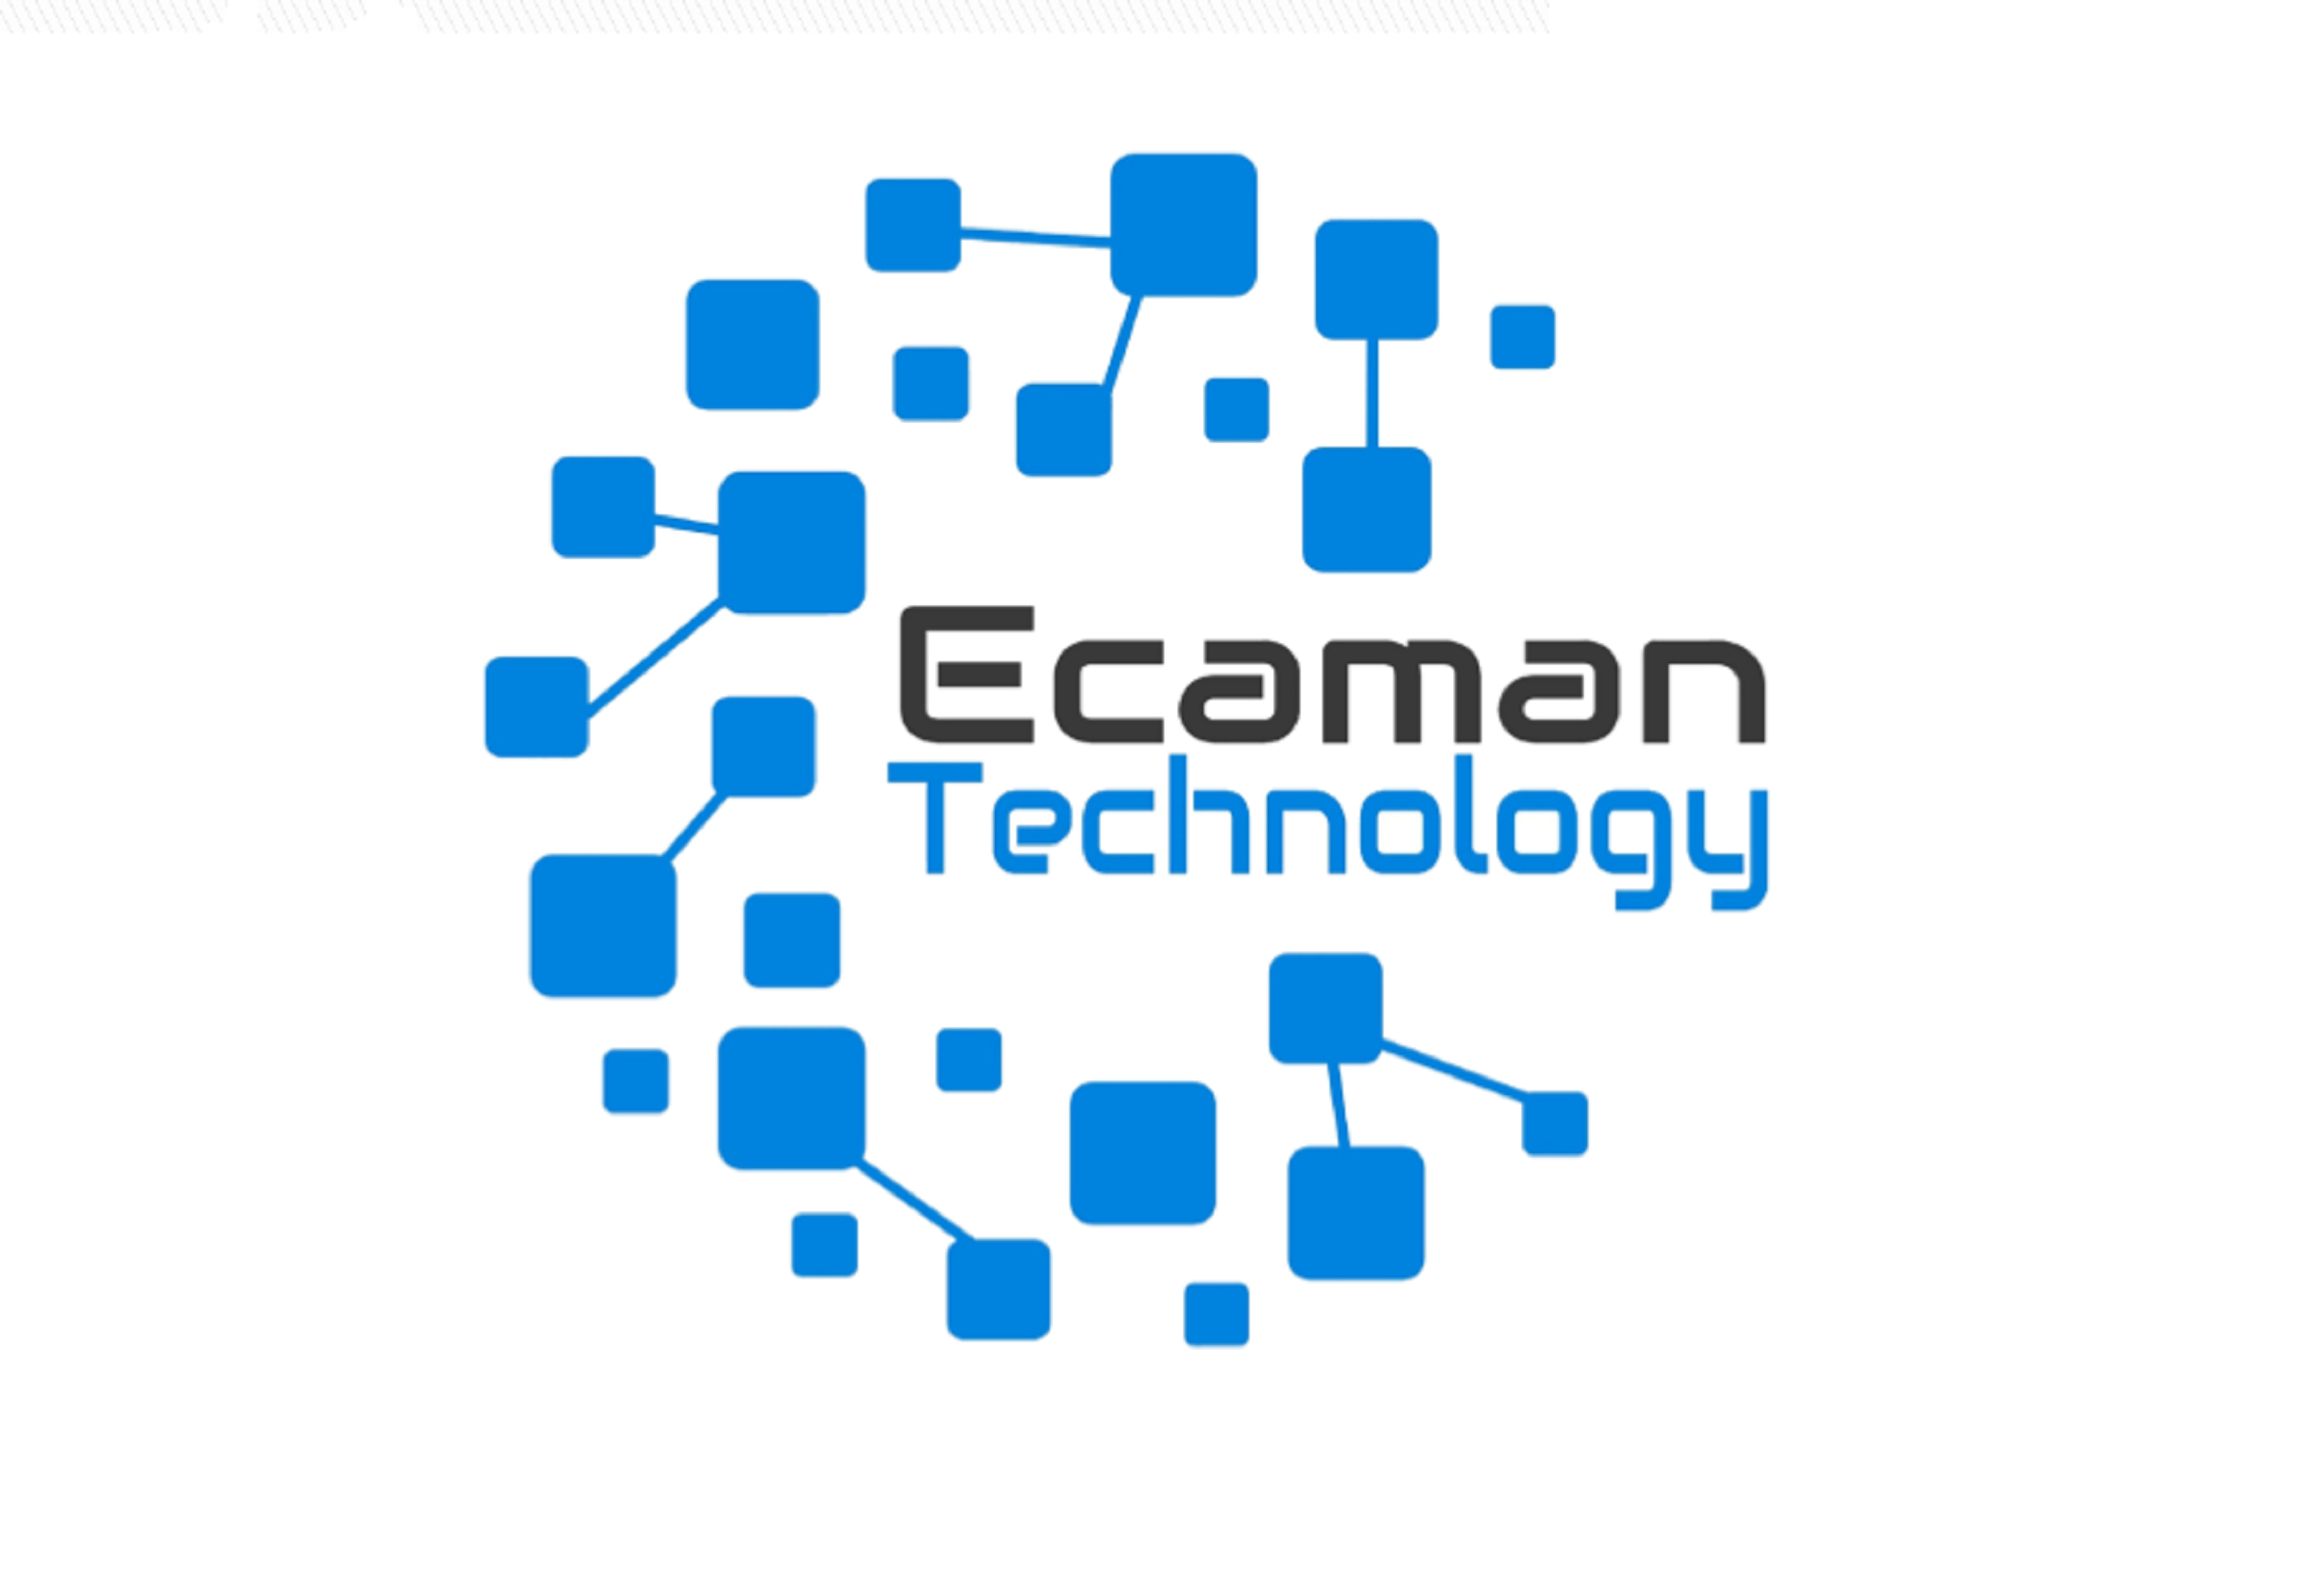 Ecaman Technology